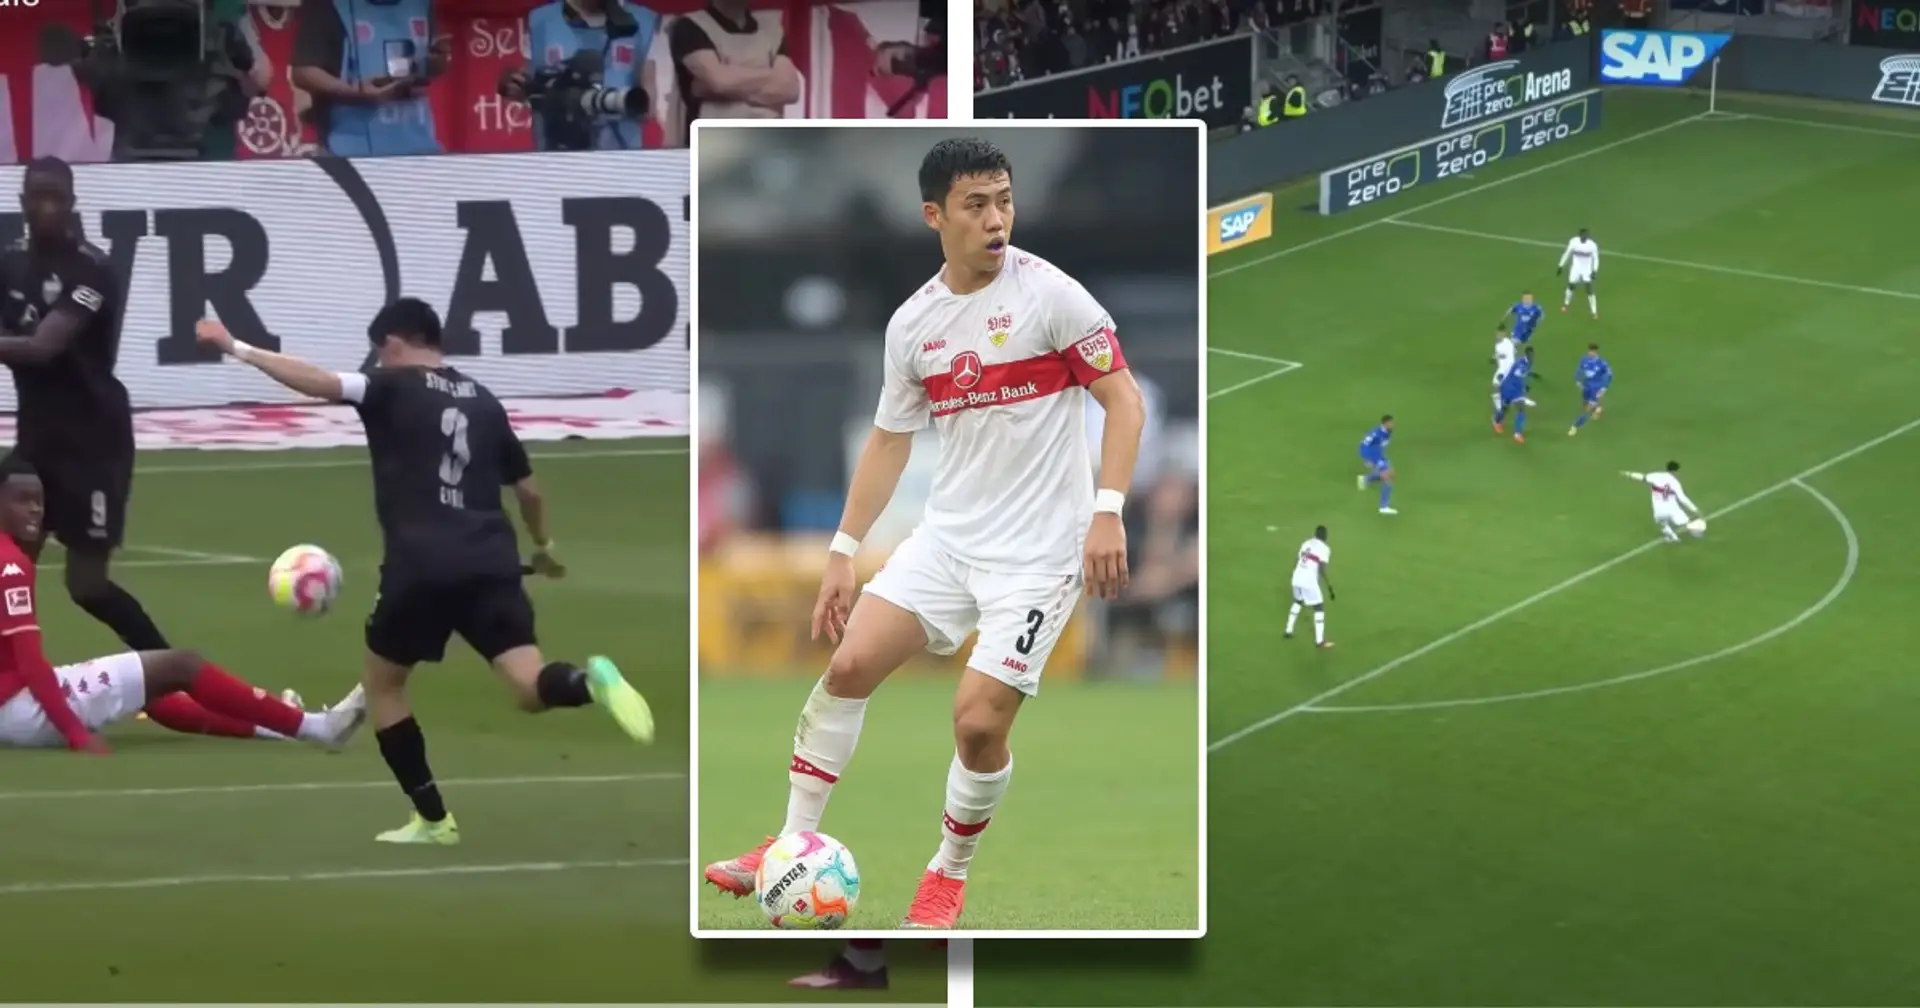 Not just a defensive midfielder – Watch Endo's best goals and creativity (video)